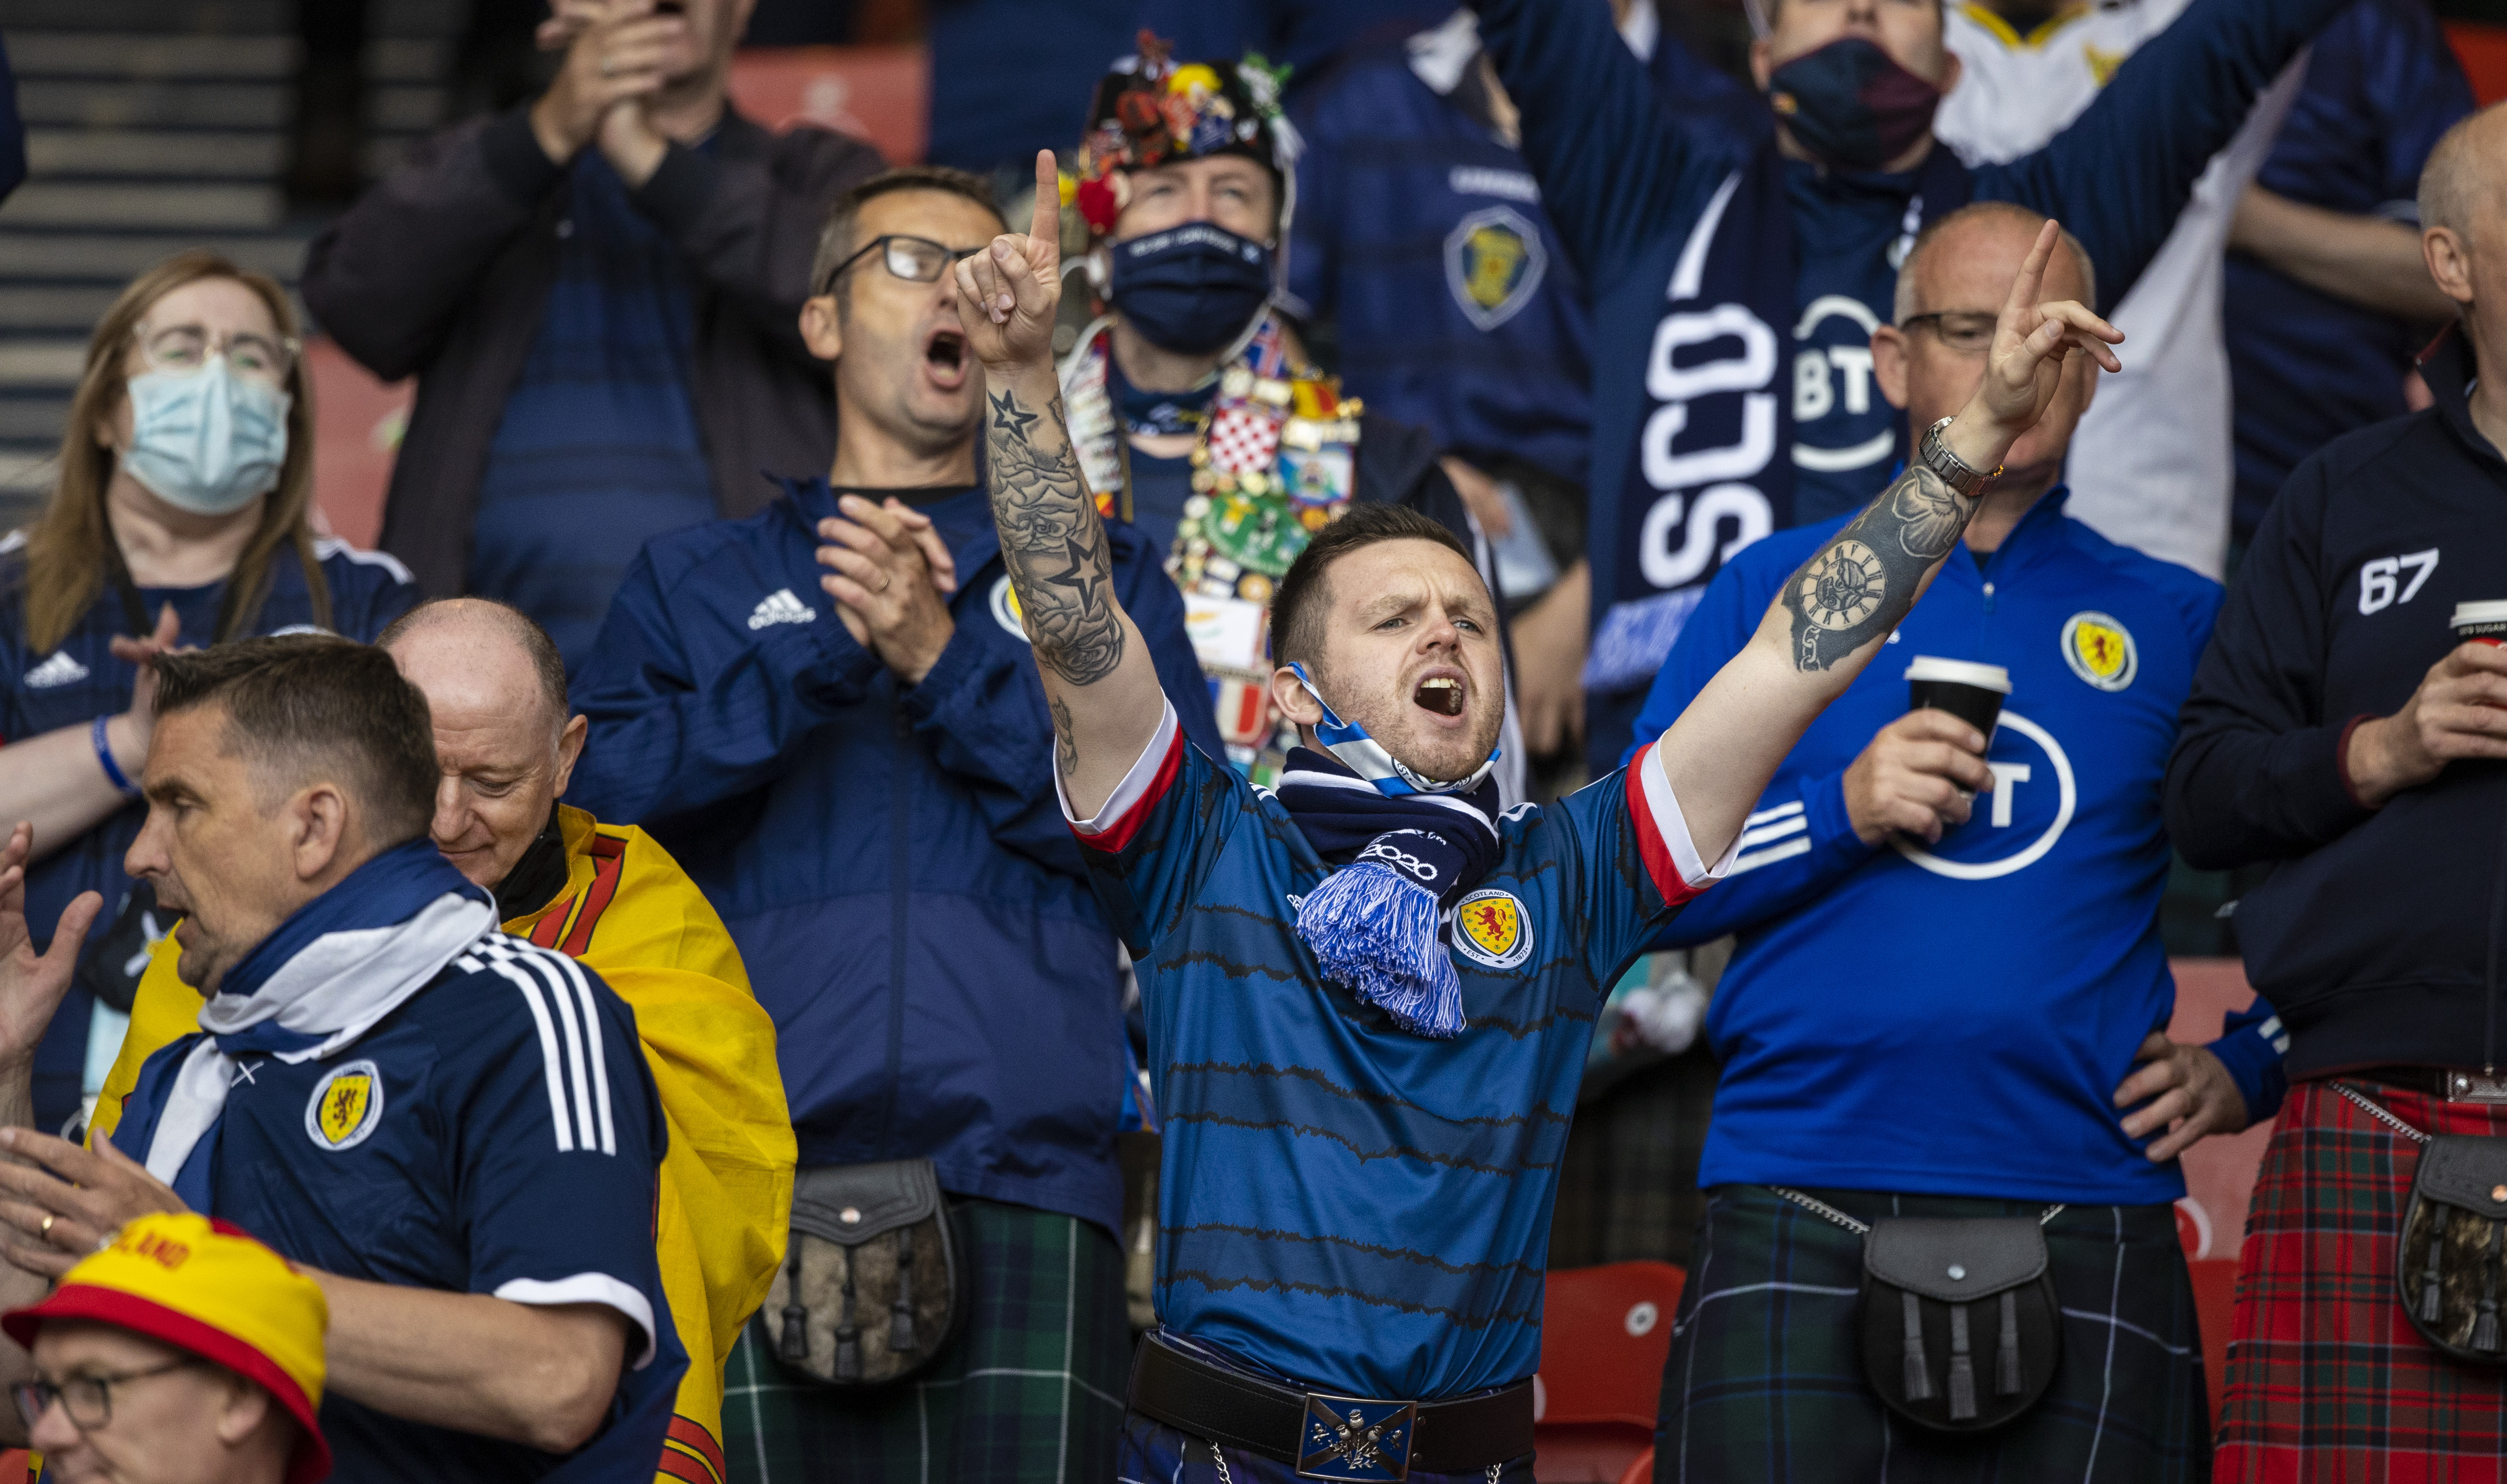 Scotland fans are making plenty of noise at Hampden.